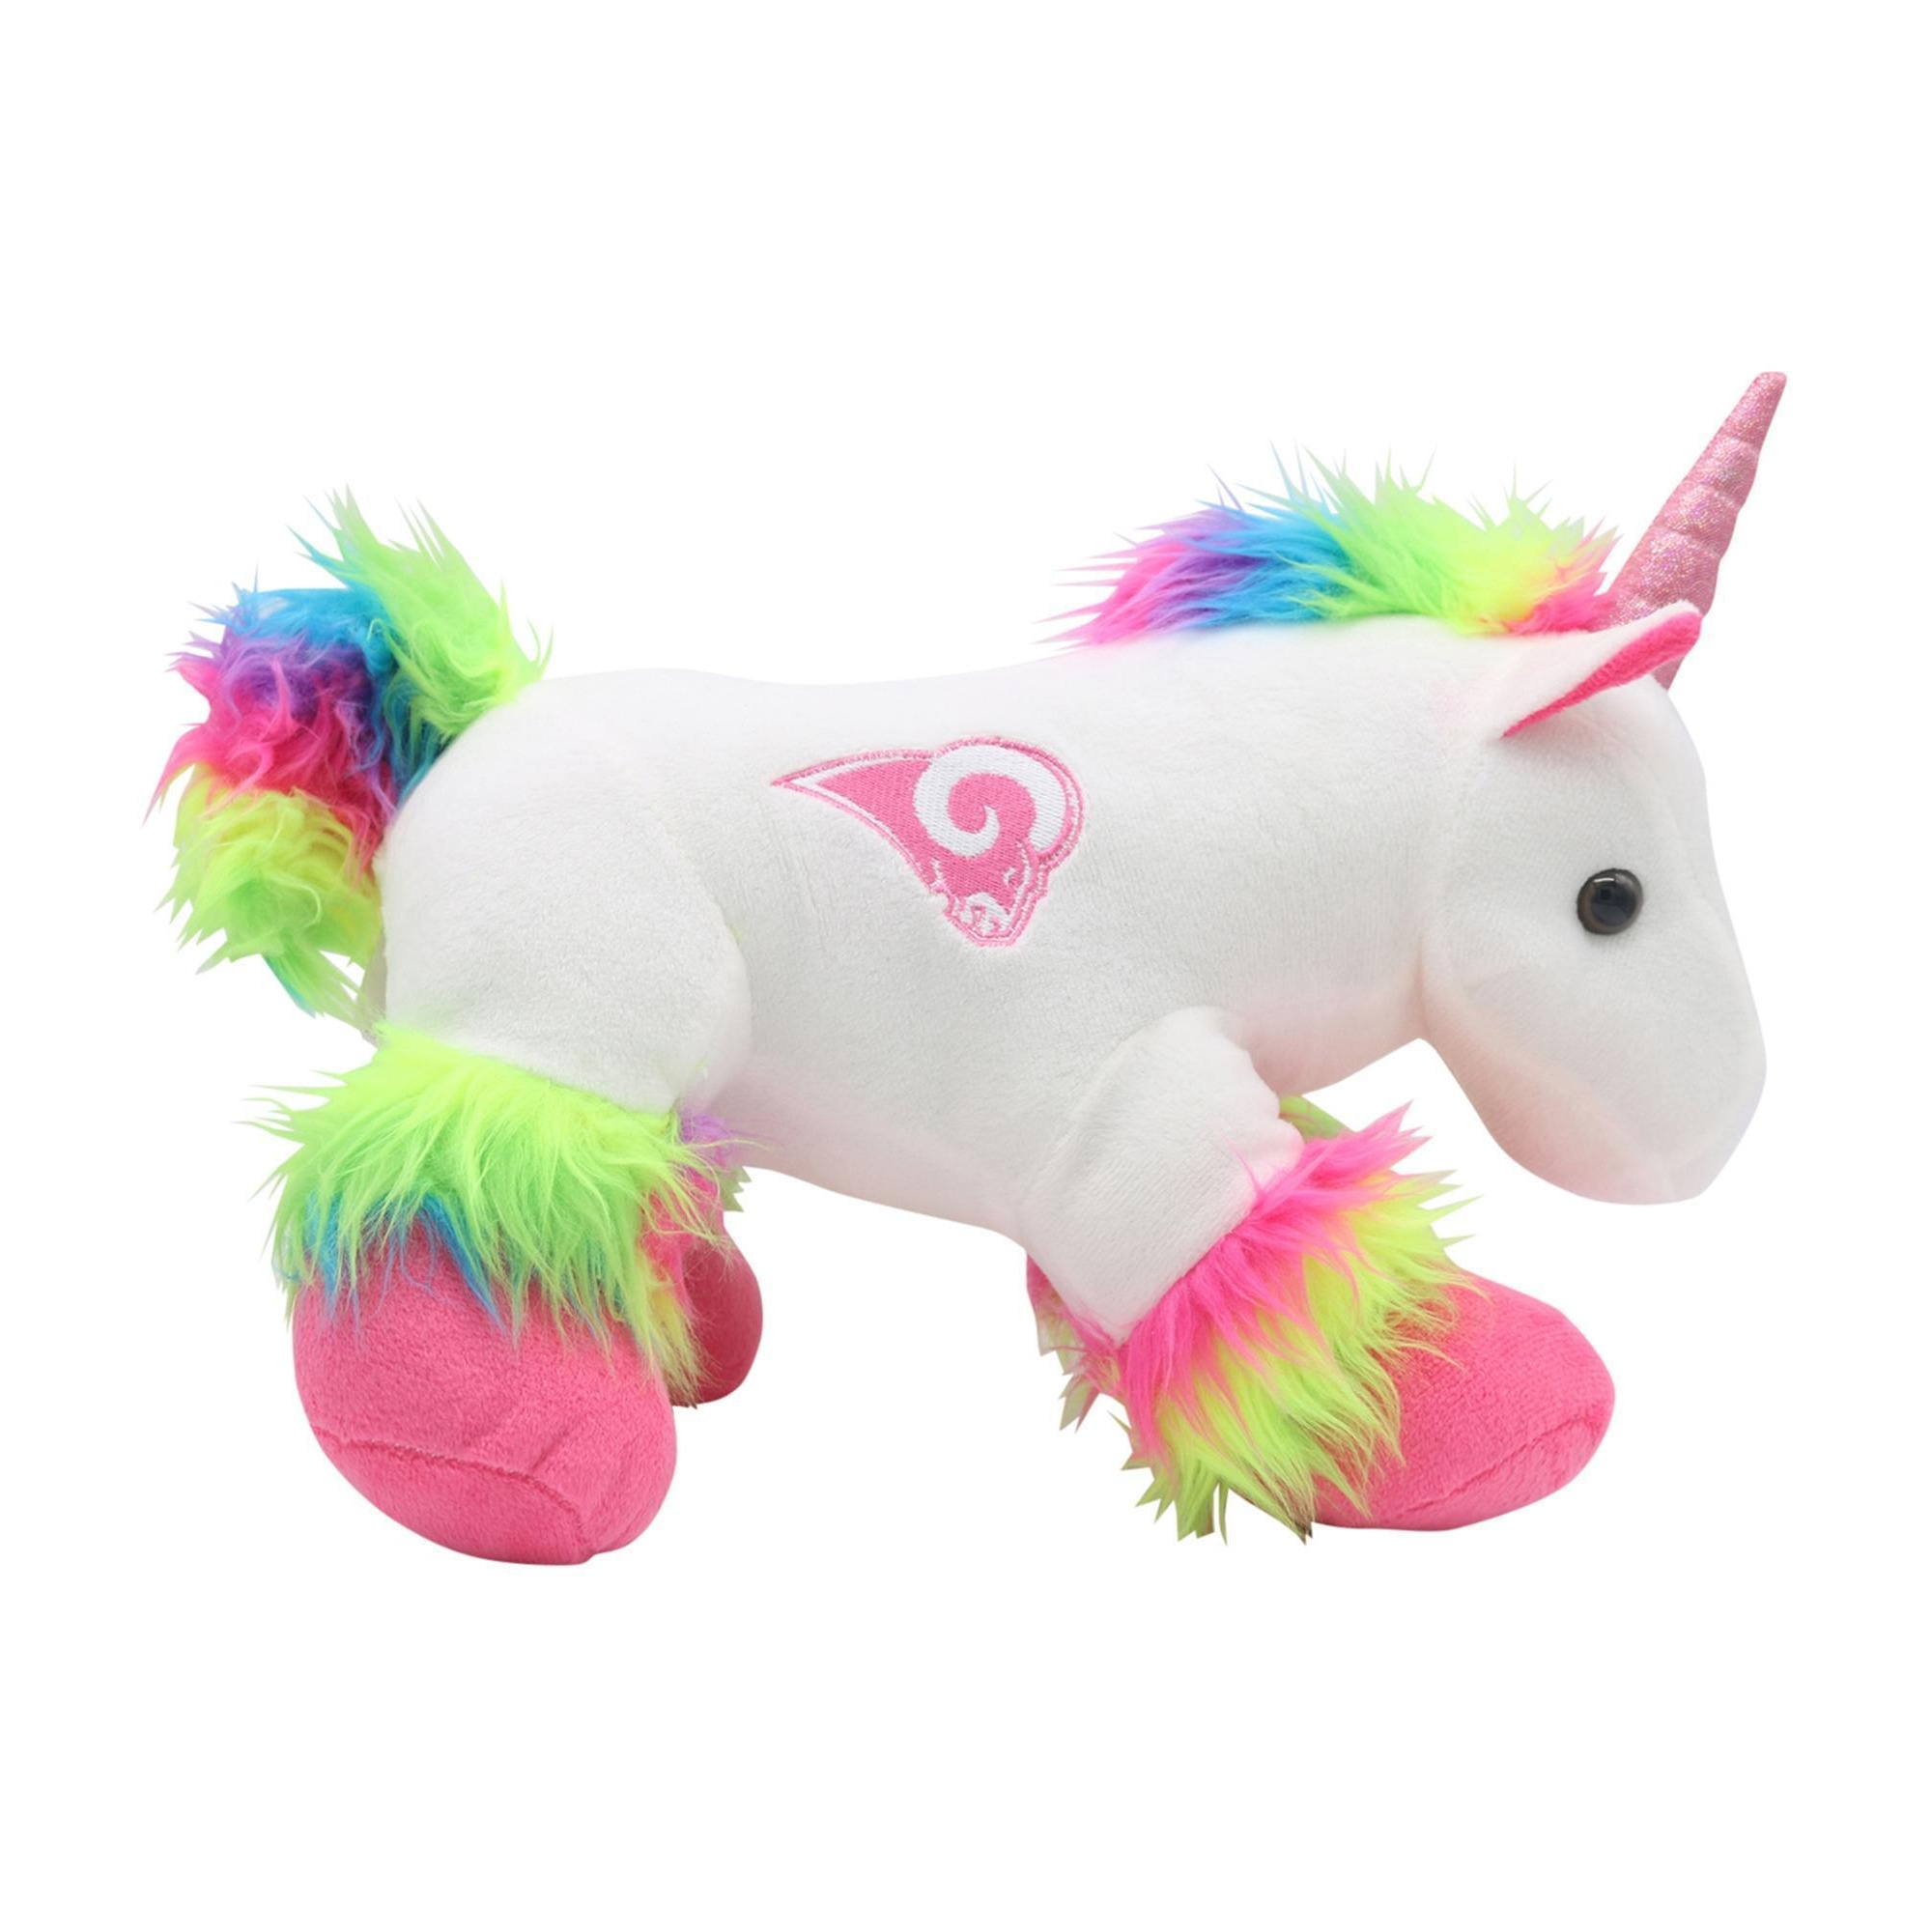 Forever Collectibles Unisex La Rams Unicorn Stuffed Plush Toy Souvenir PINKWHT